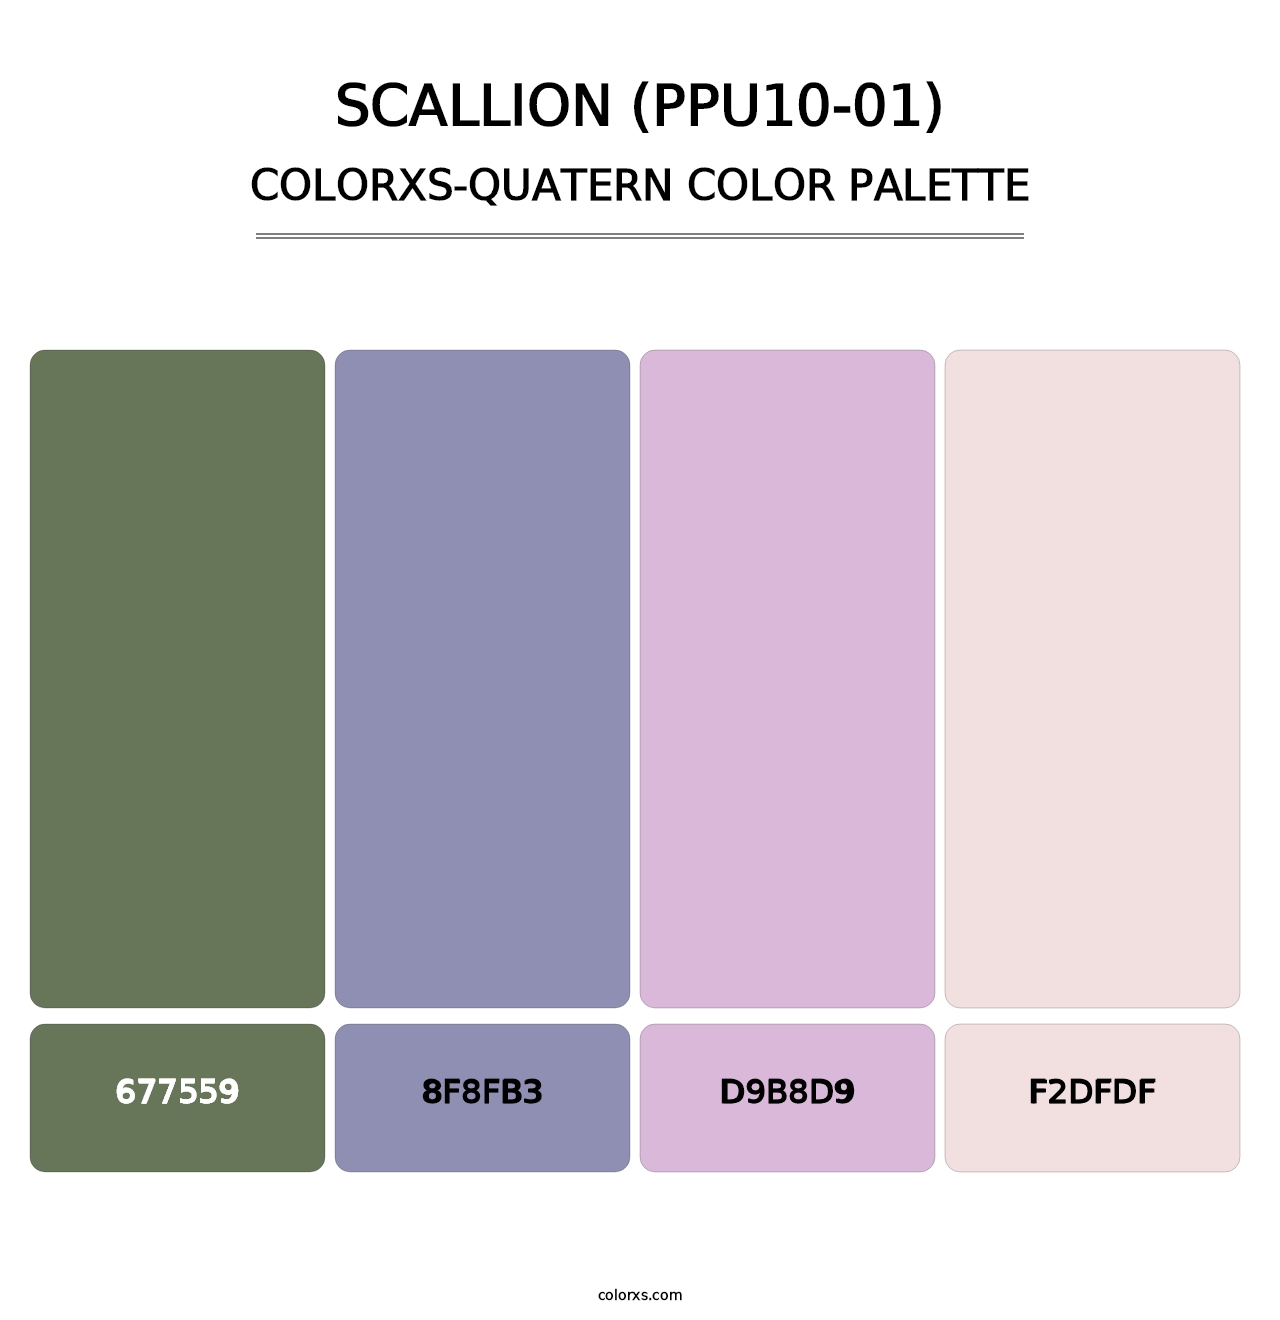 Scallion (PPU10-01) - Colorxs Quatern Palette